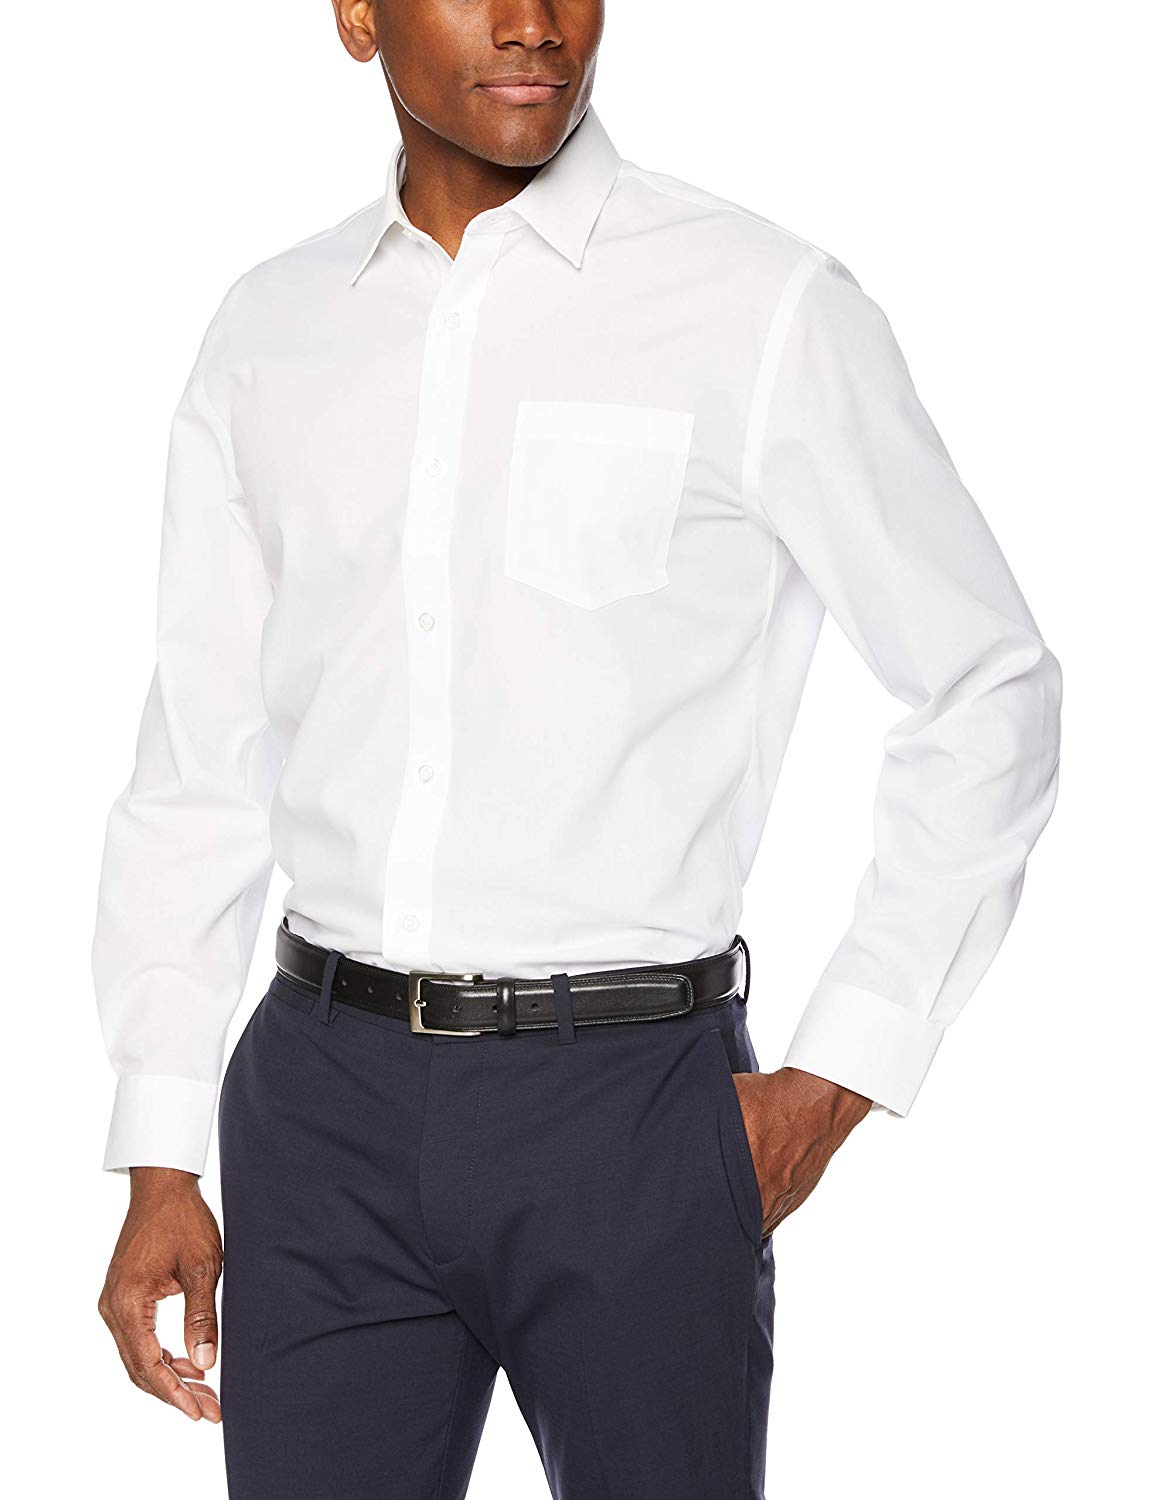 Men's Regular-Fit Wrinkle-Resistant, White, Size 18.0 0H7m | eBay